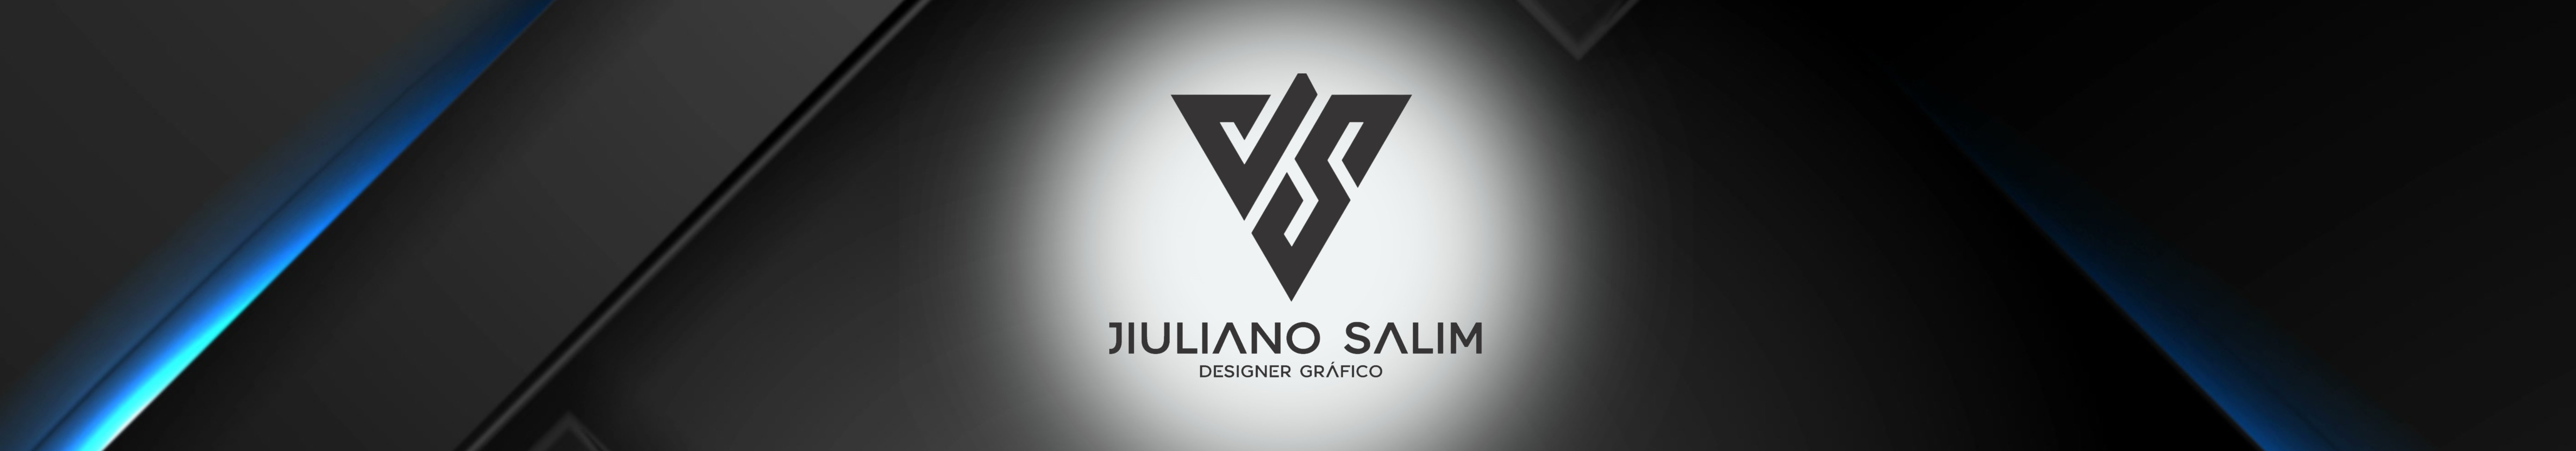 Jiuliano Salim's profile banner